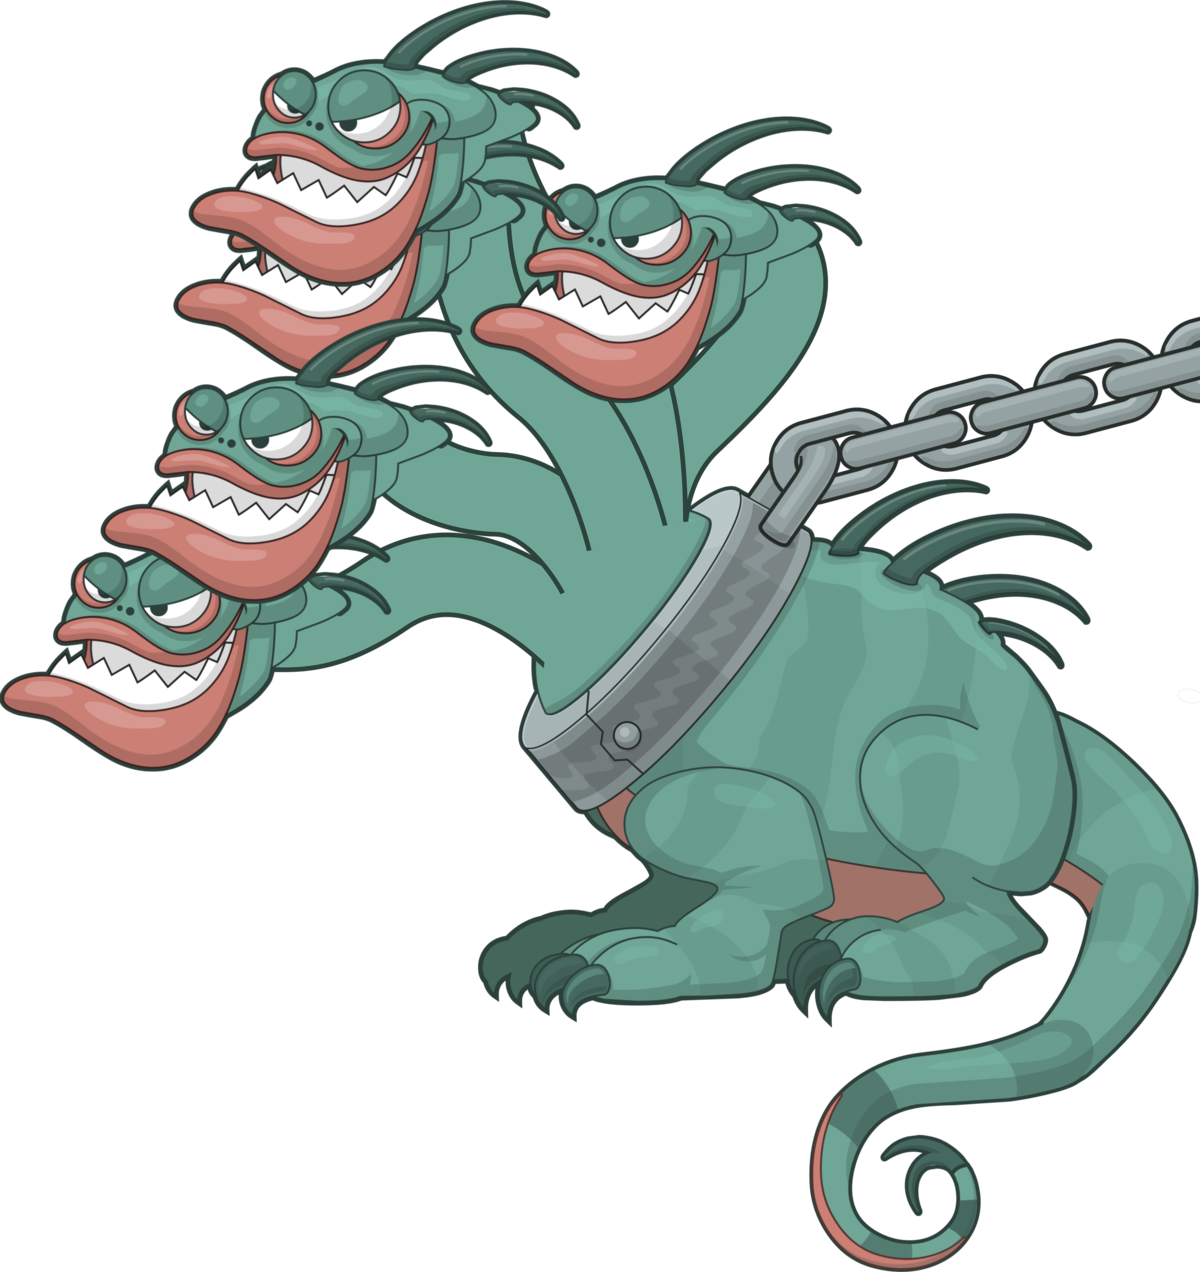 A Cartoon Of A Lizard With A Chain